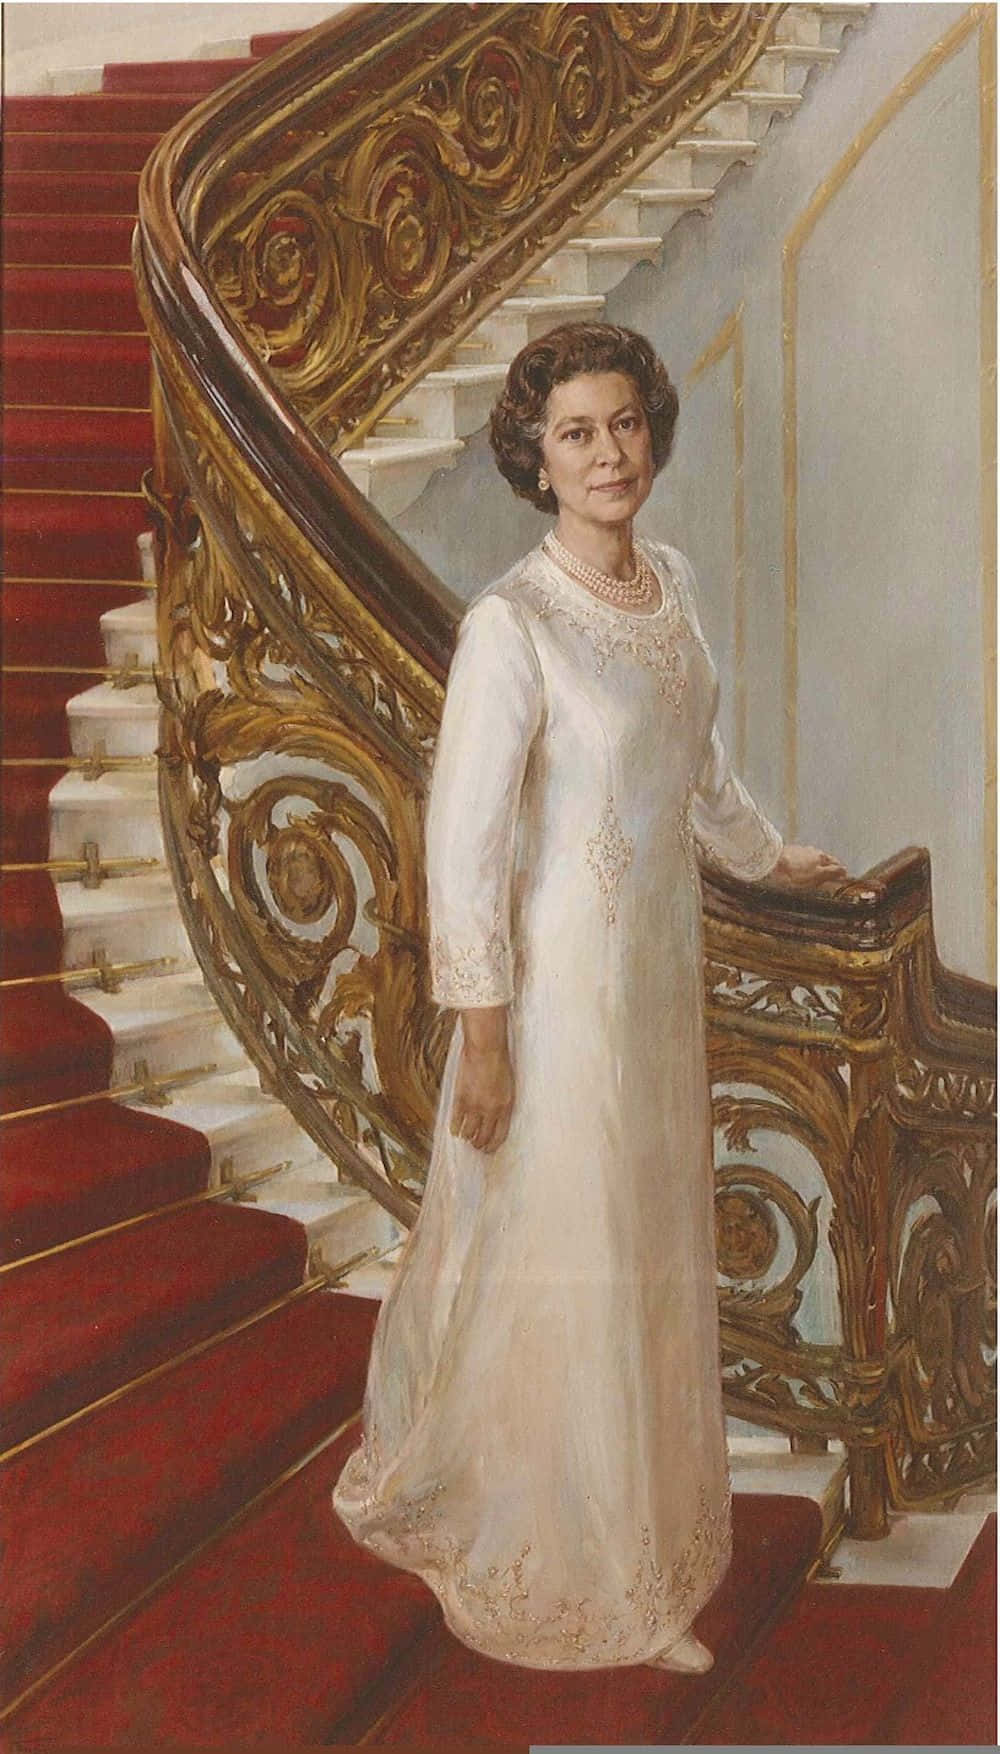 Retratode La Reina Isabel Ii Luciendo Atuendo Real.